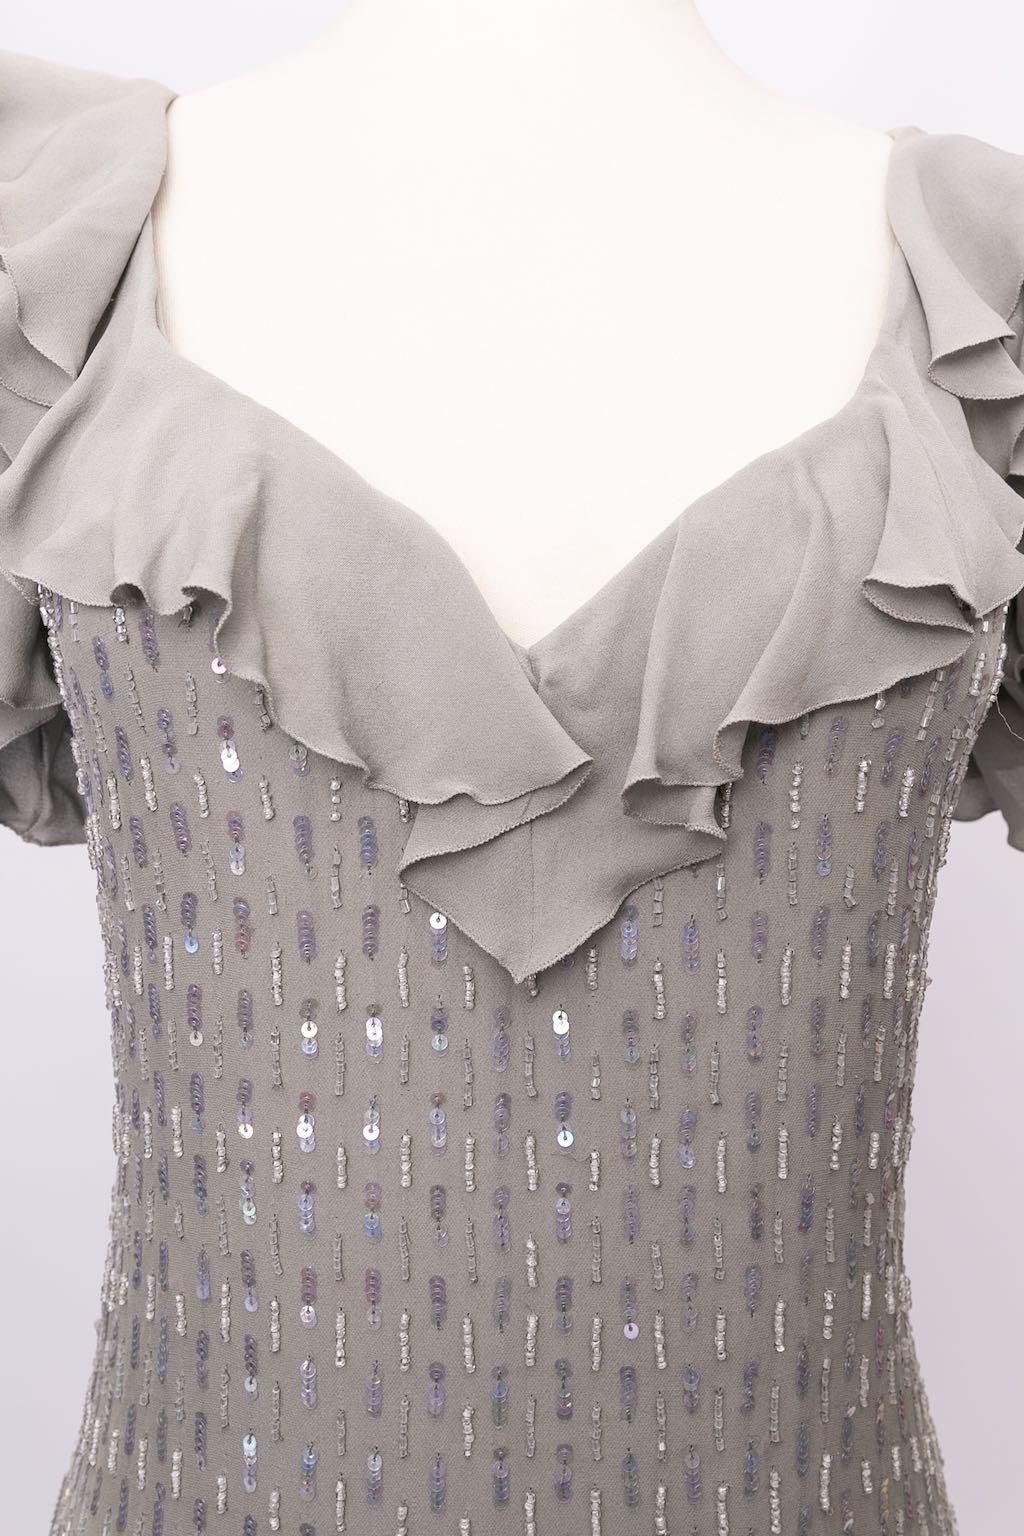 Loris Azzaro - Robe en soie grise brodée, taille 36FR en vente 1